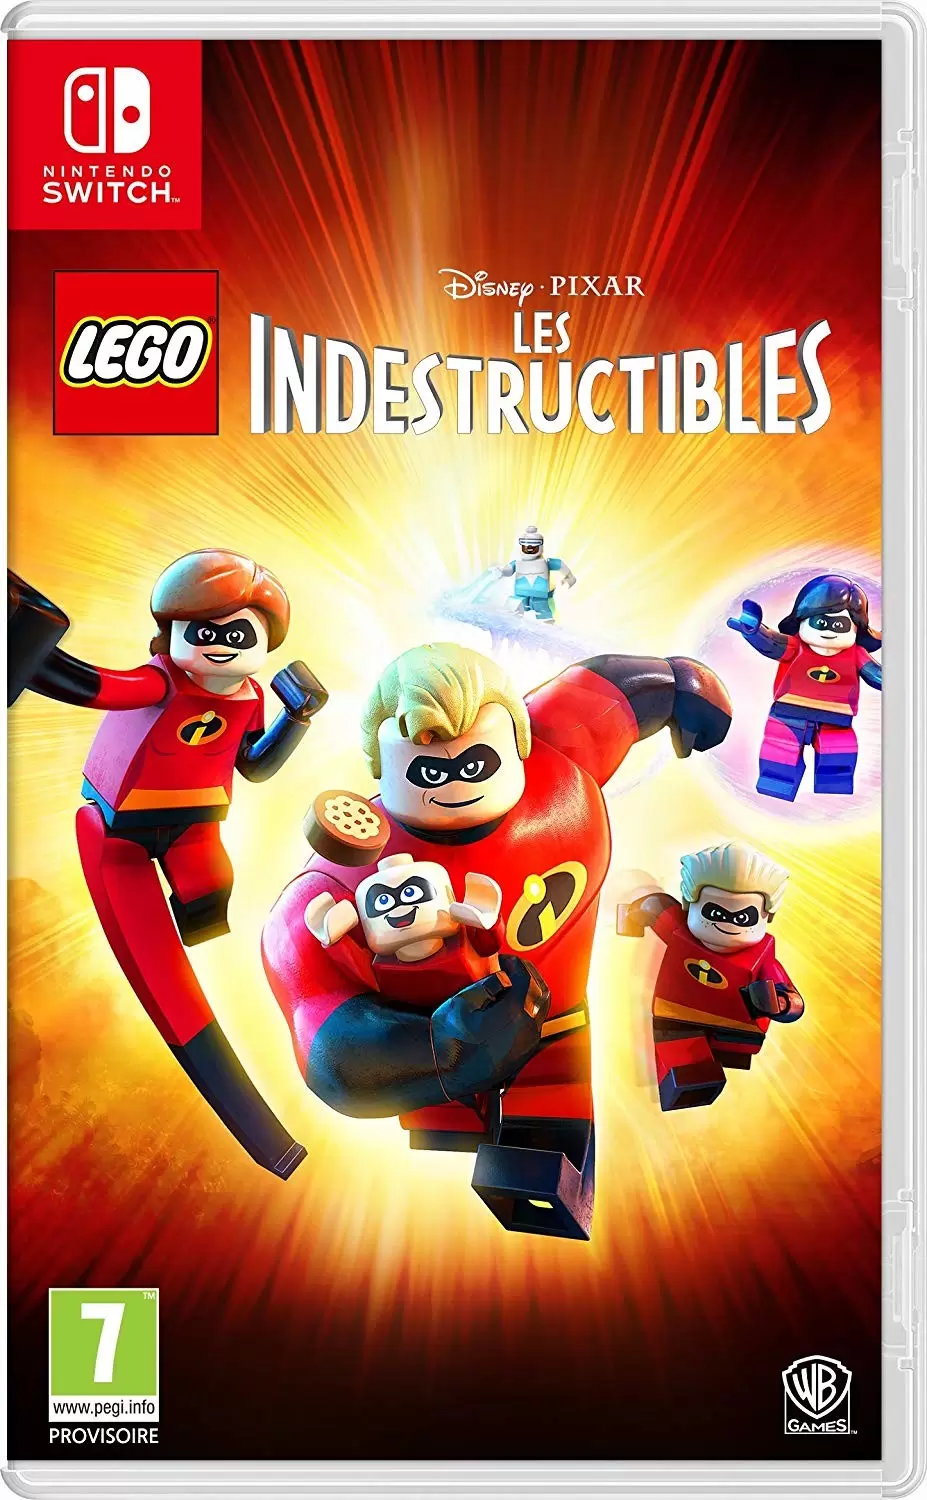 Nintendo Switch Games - LEGO - Les Indestructibles